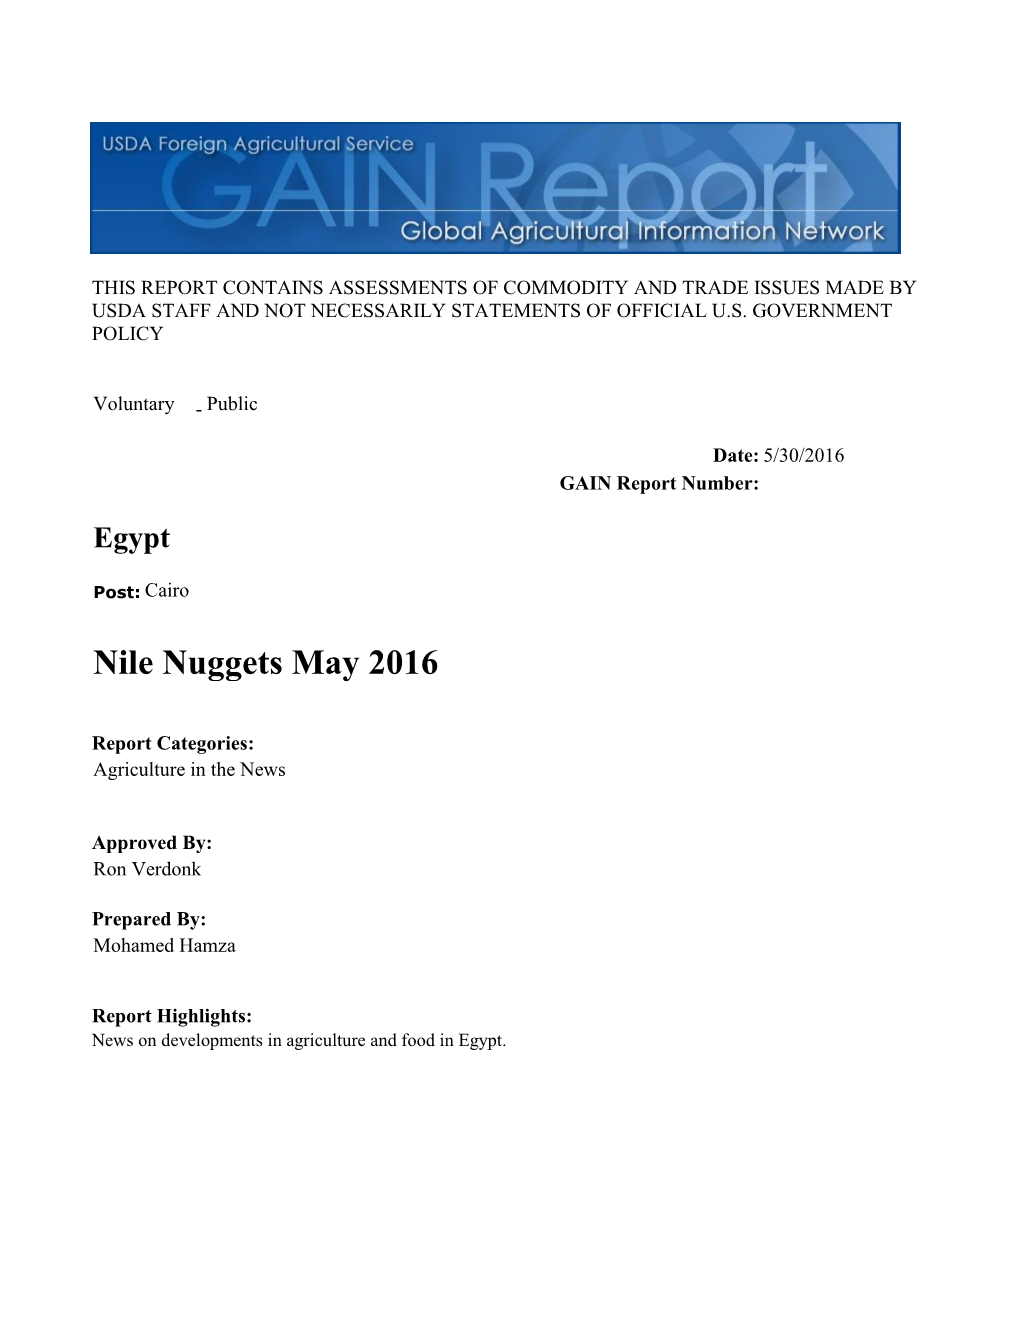 Egypt: Nile Nuggets